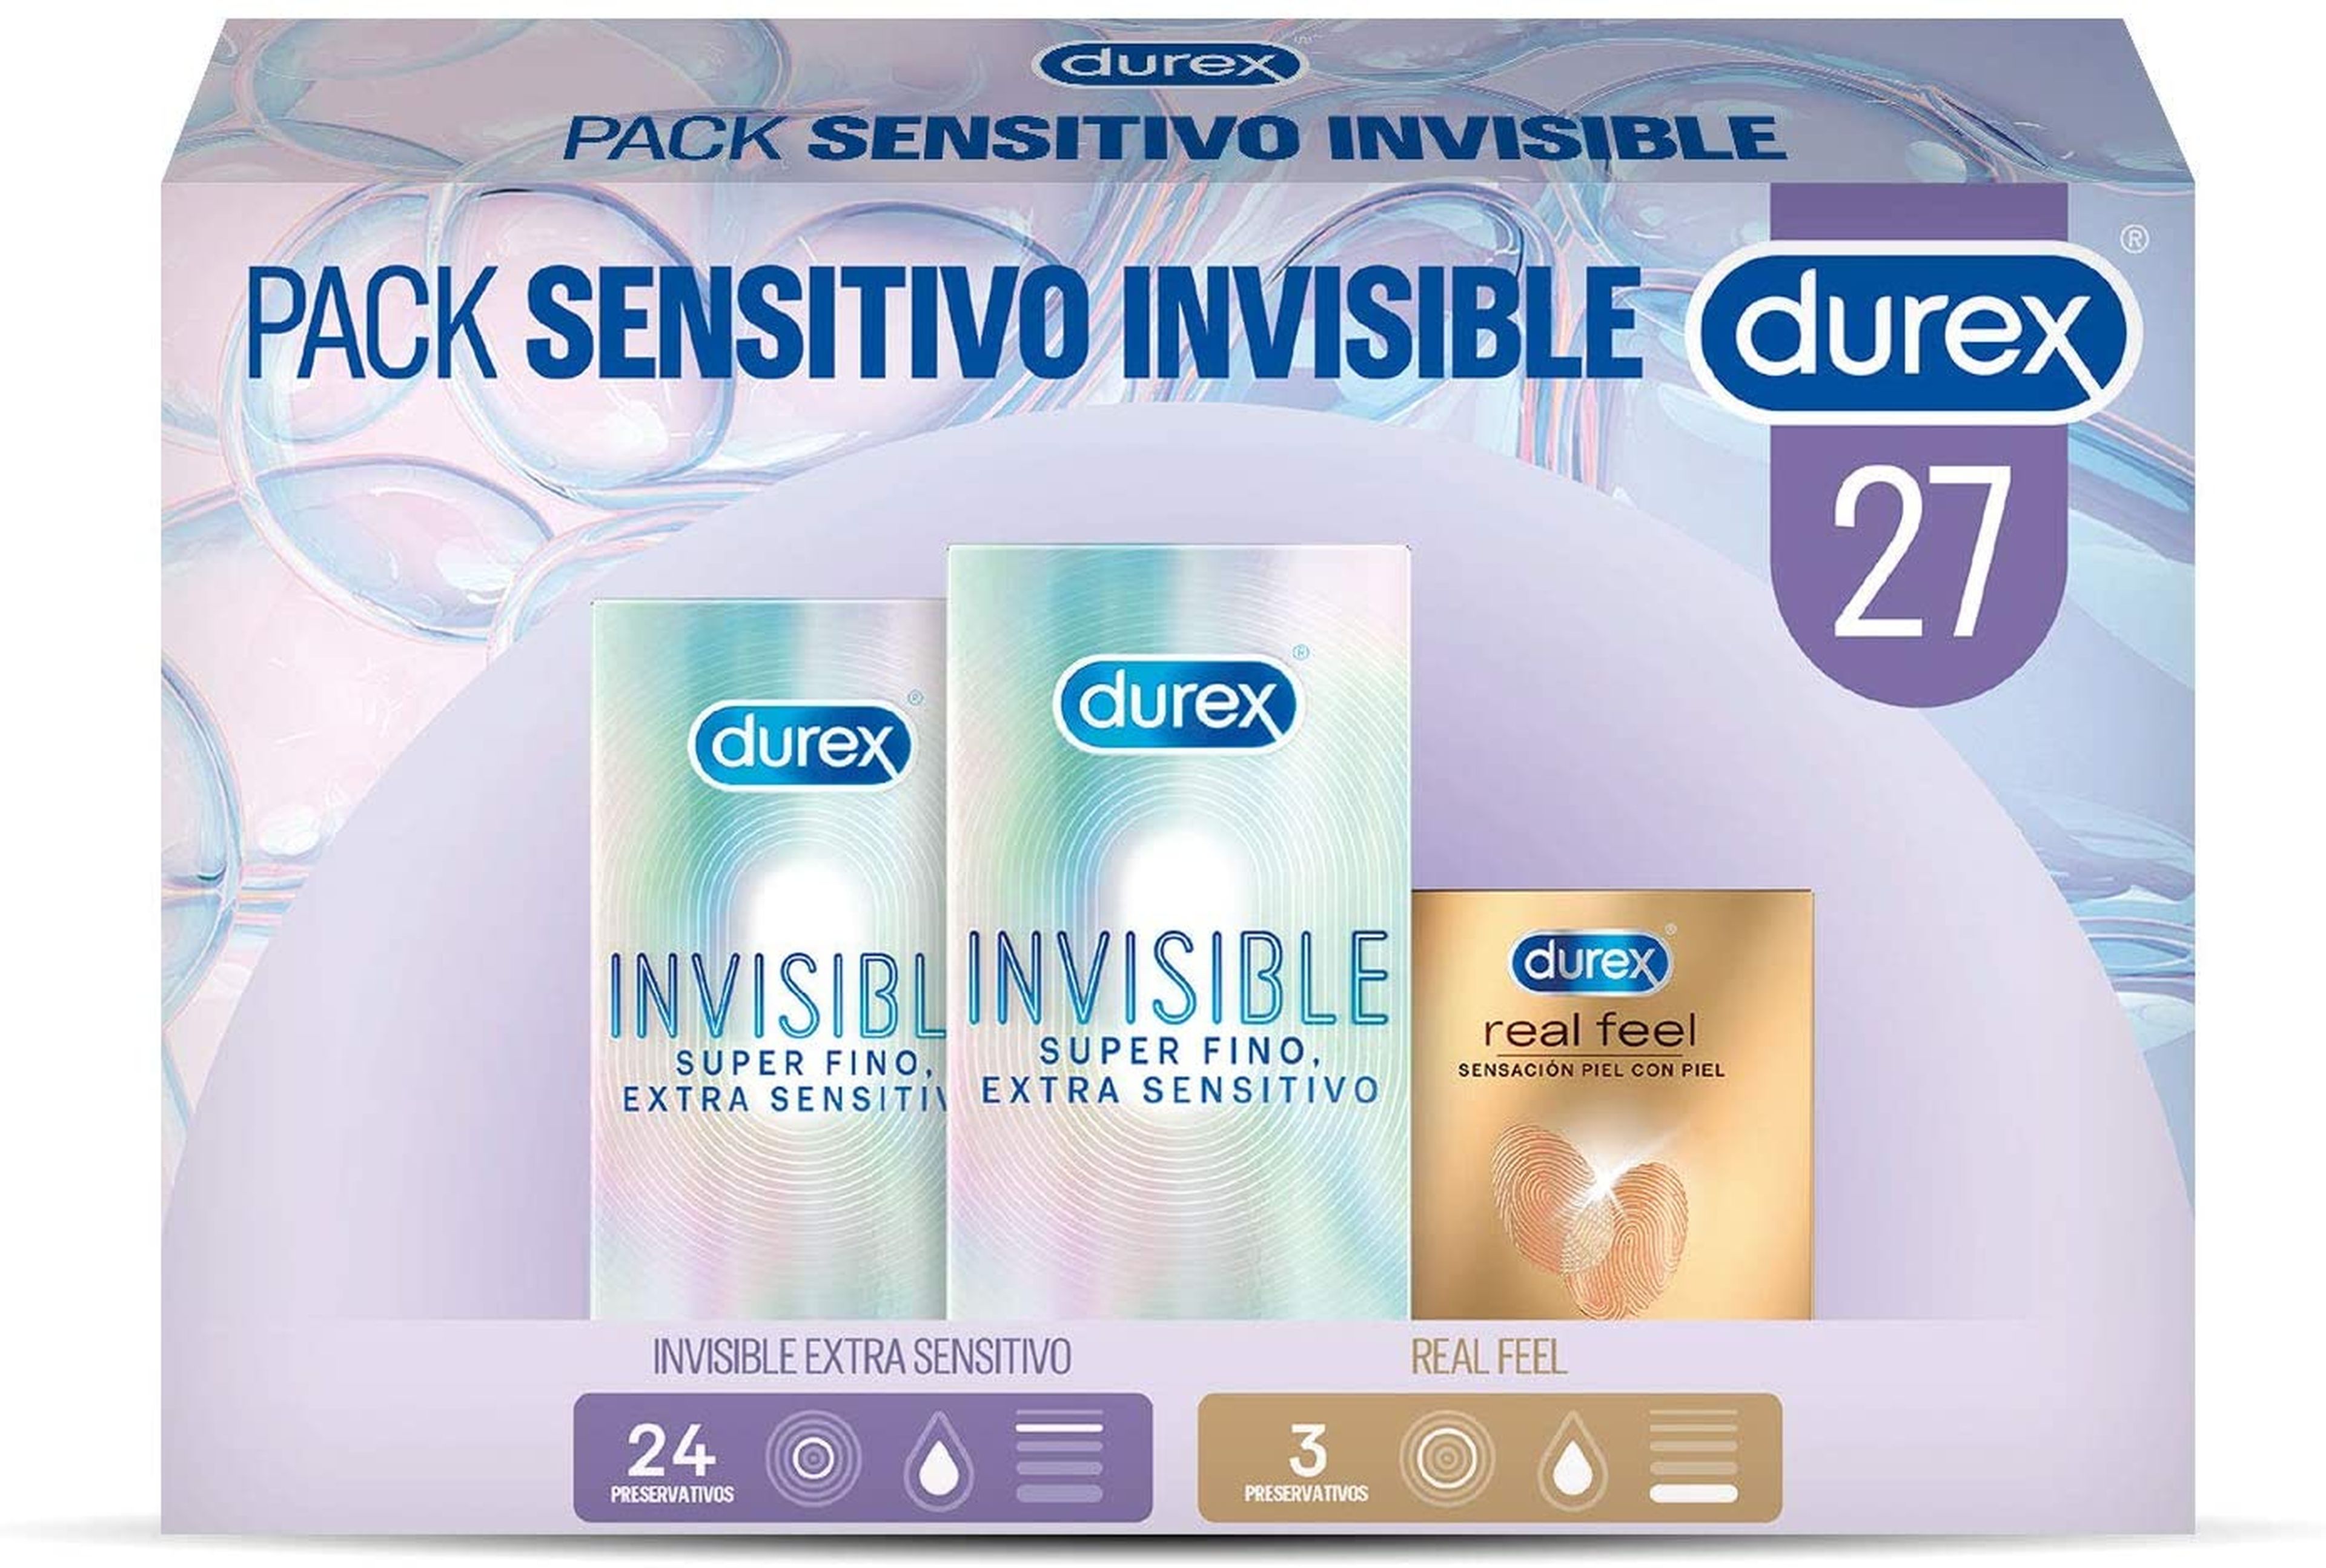 Pack sensitivo invisible